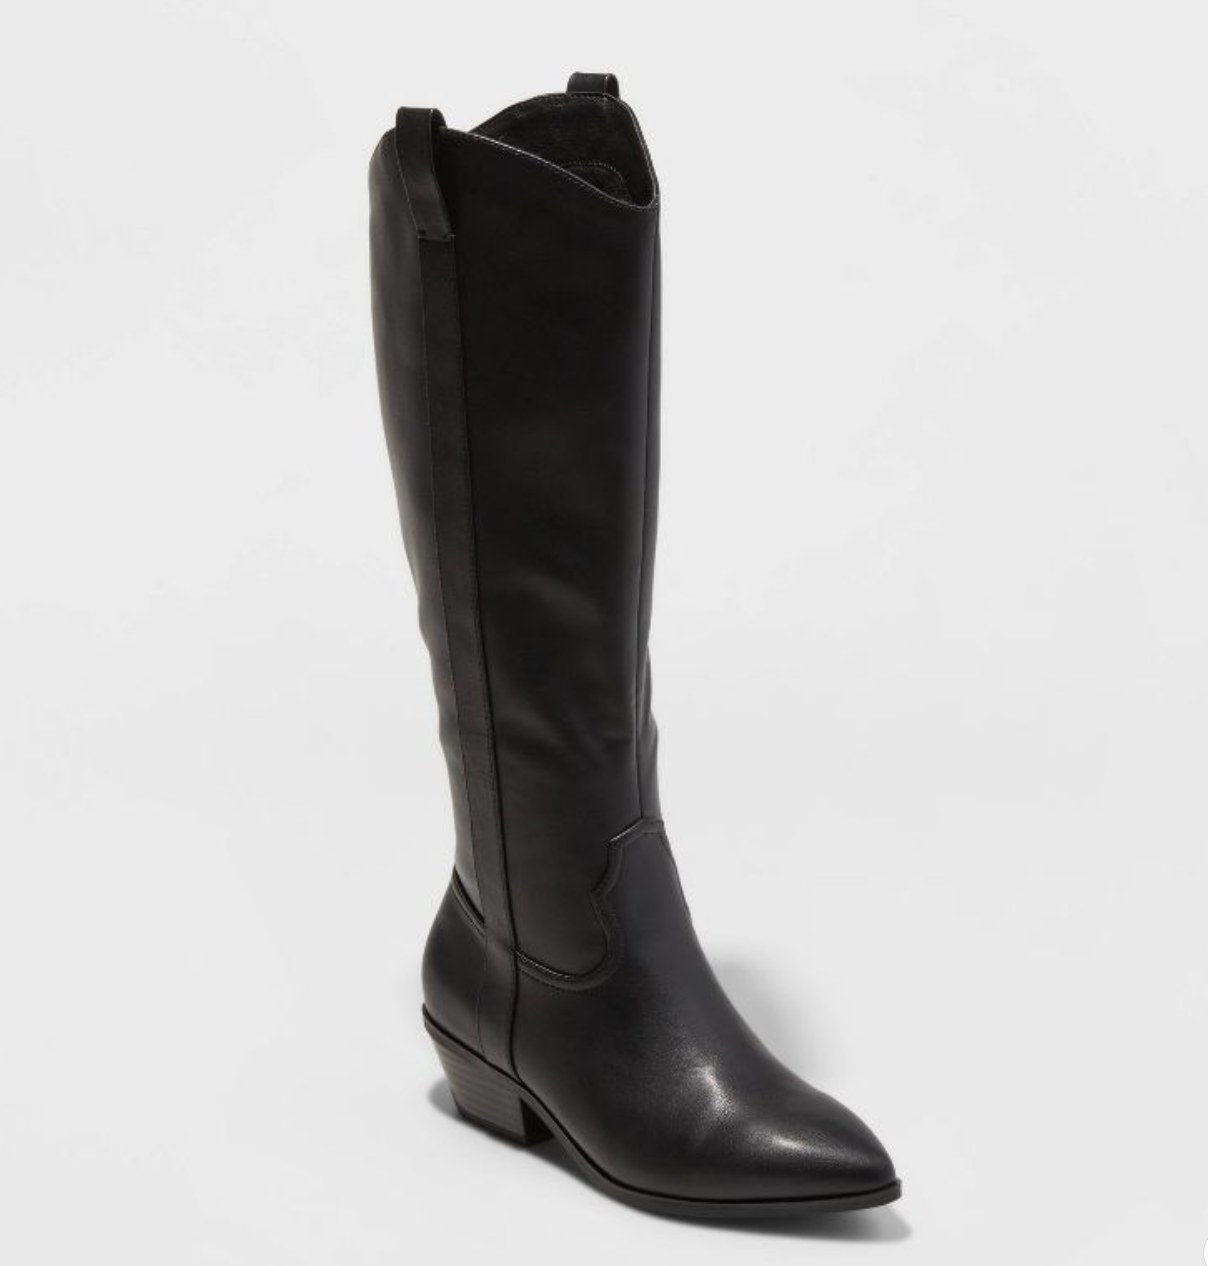 A black tall western boot